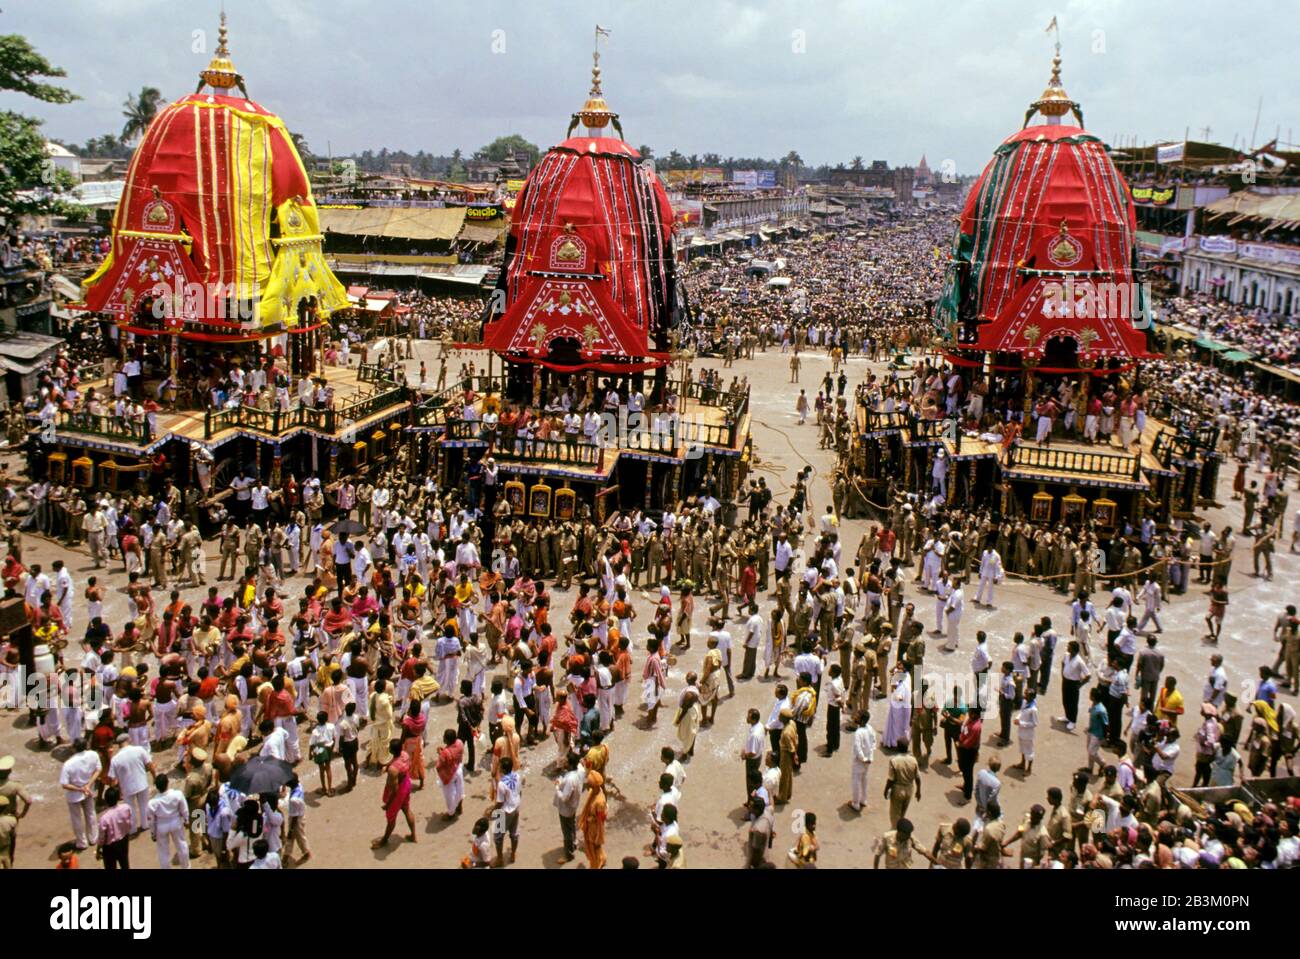 Rath yatra Rathyatra car festival le voyage de Jagannath puri, Orissa, Inde, Asie Banque D'Images